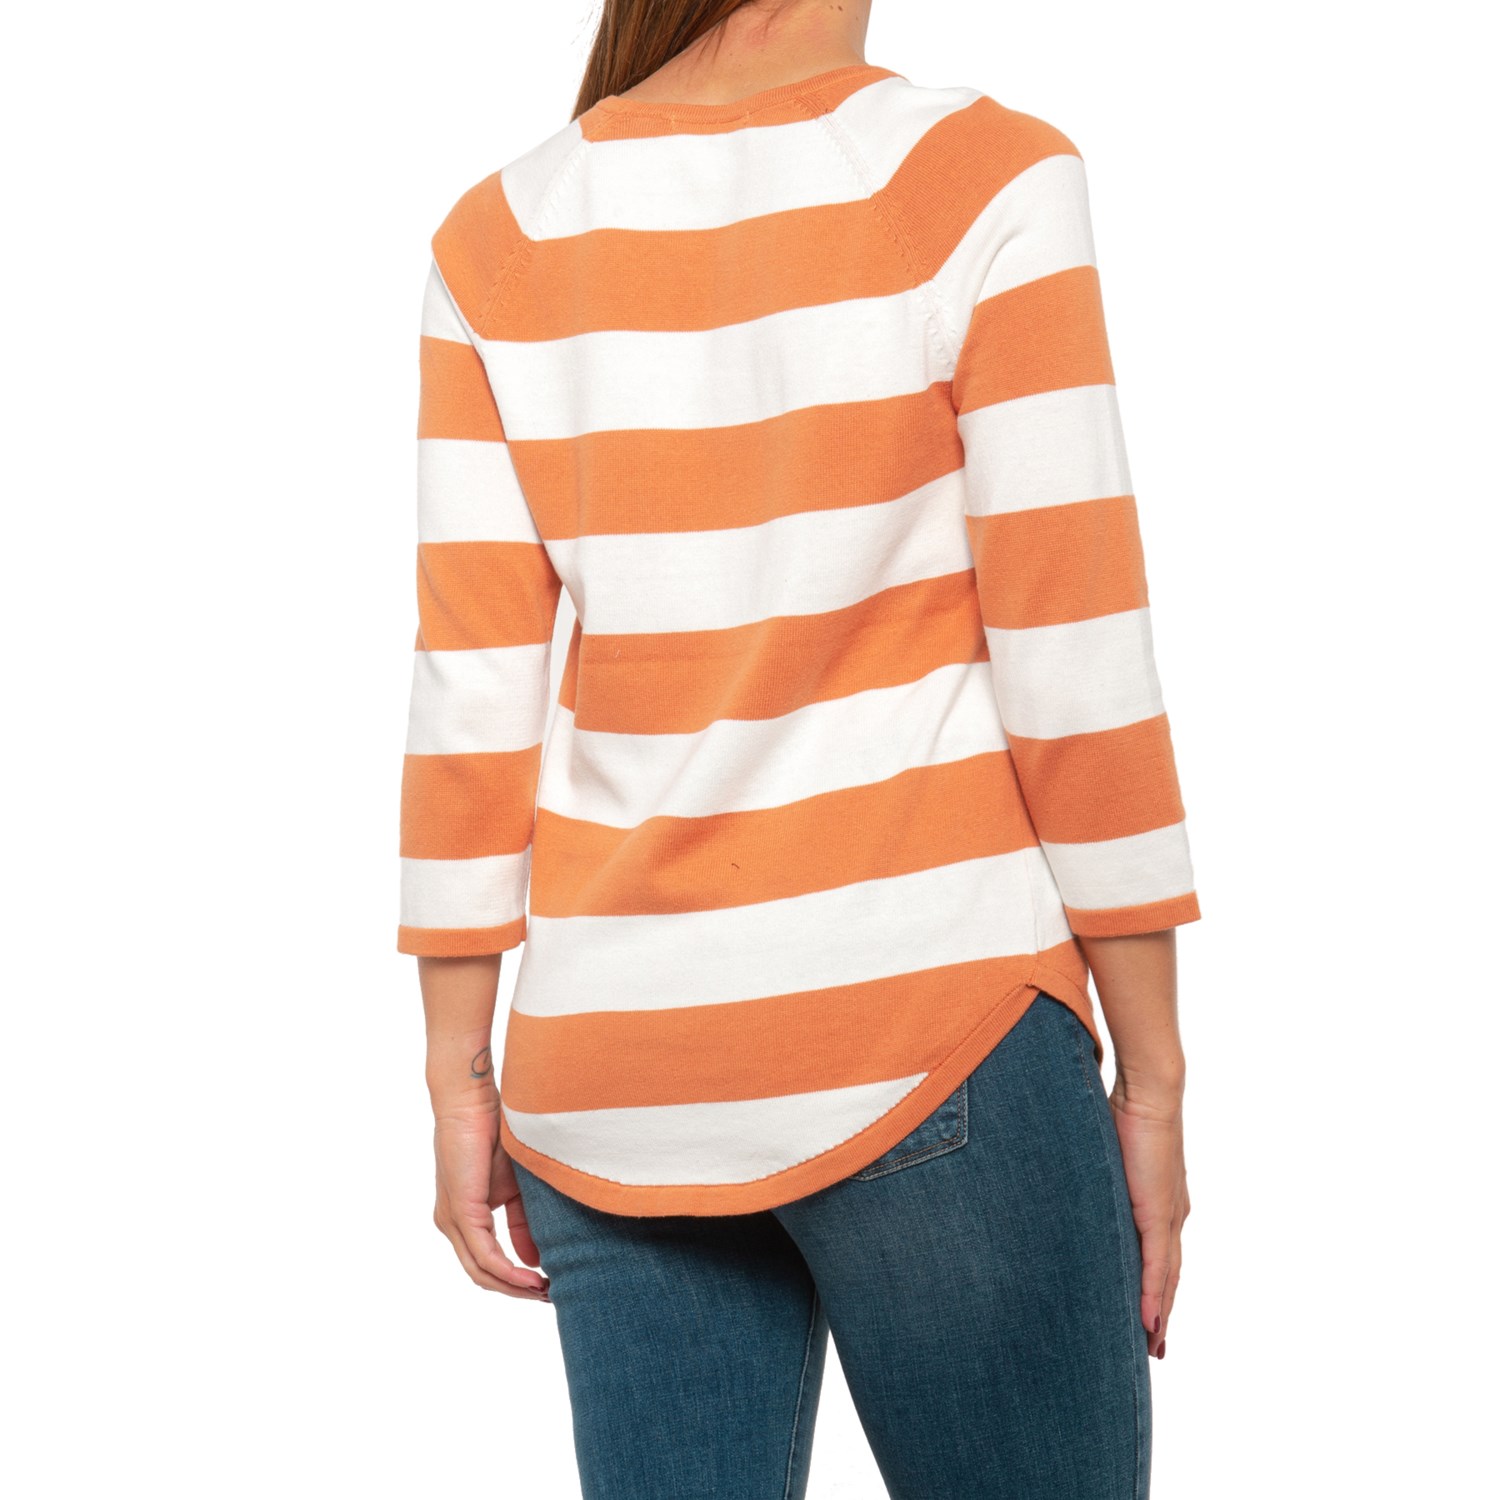 Jeanne Pierre 100% Cotton Striped Sweater (For Women) - Save 64%